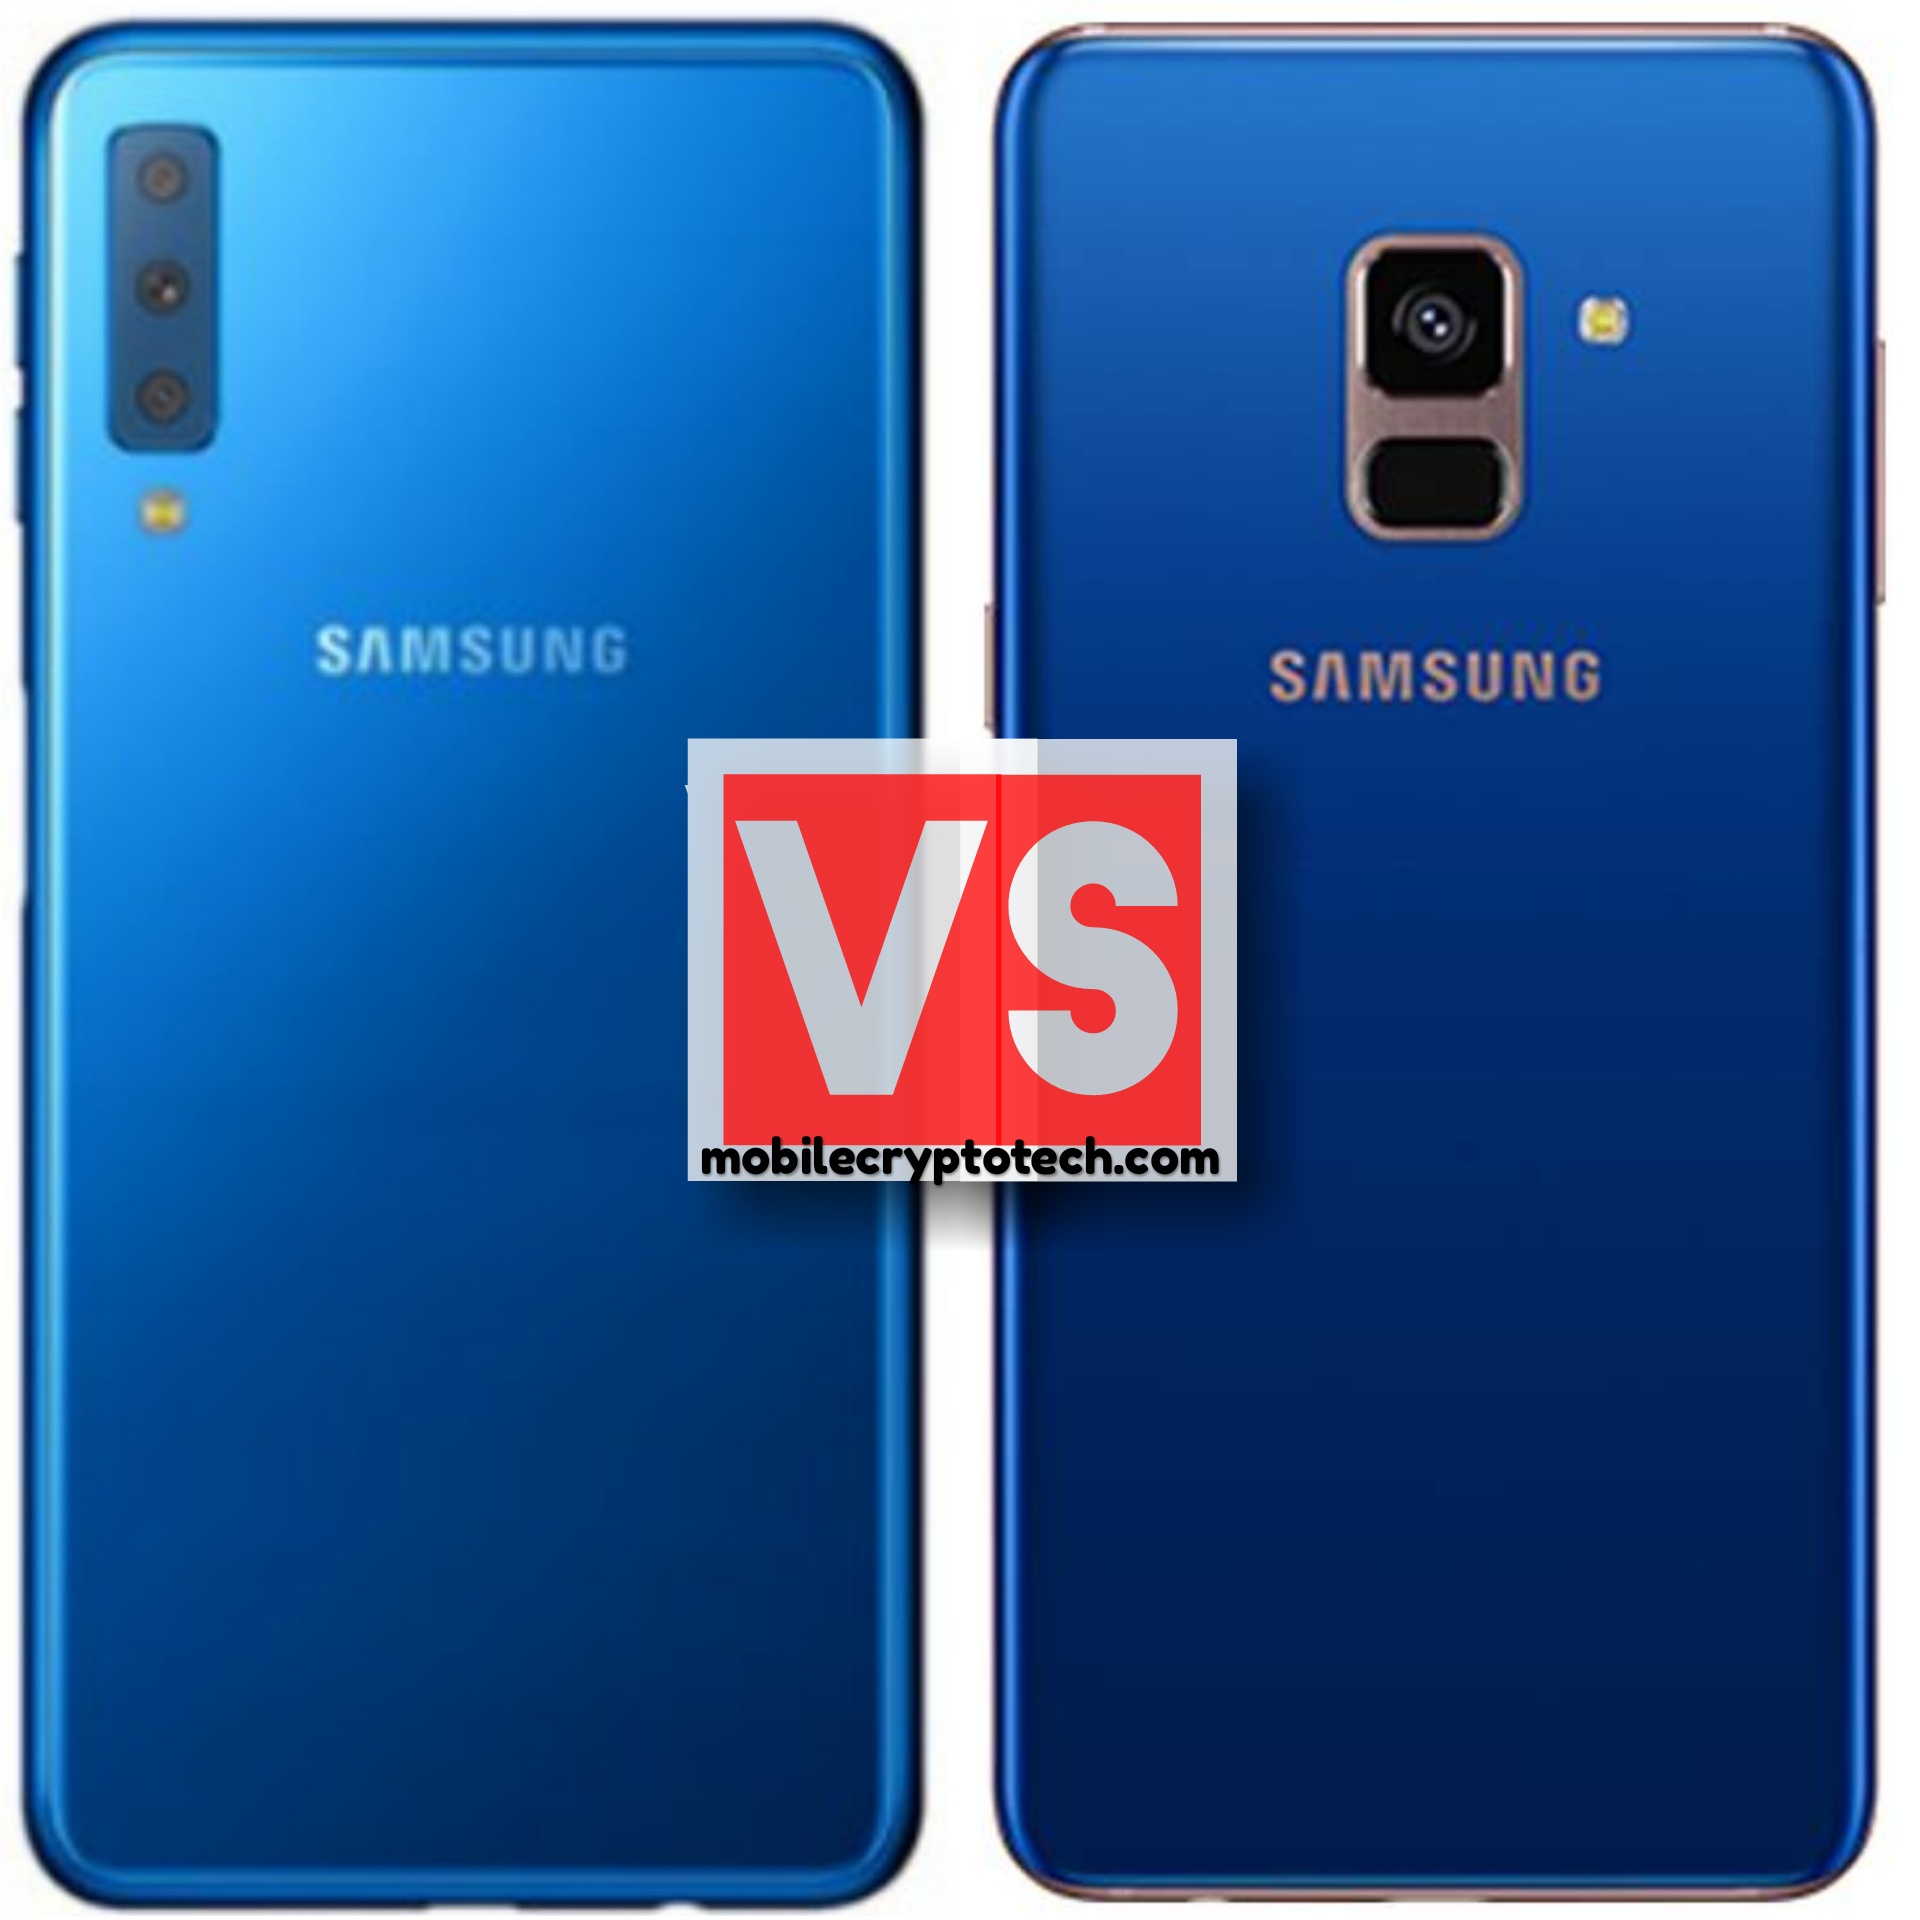 Samsung Galaxy A7 2018 Vs A8 2018